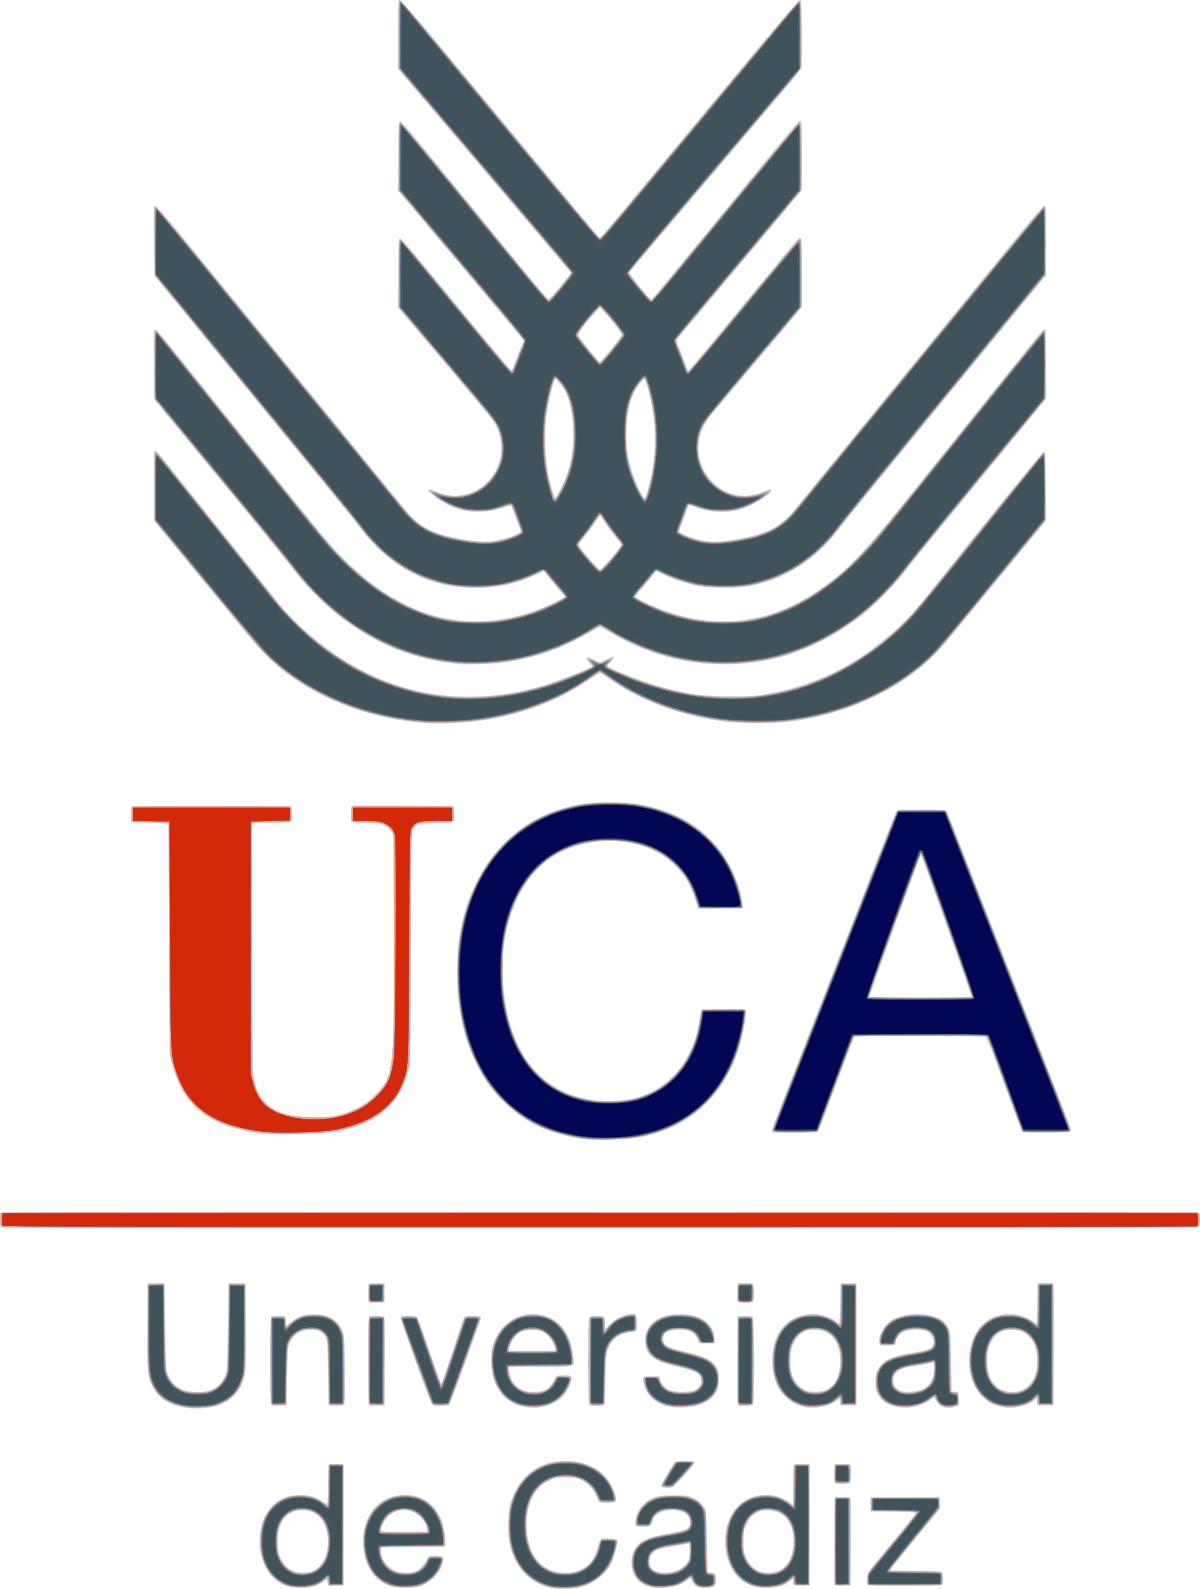 Study in University of Cádiz with Scholarship